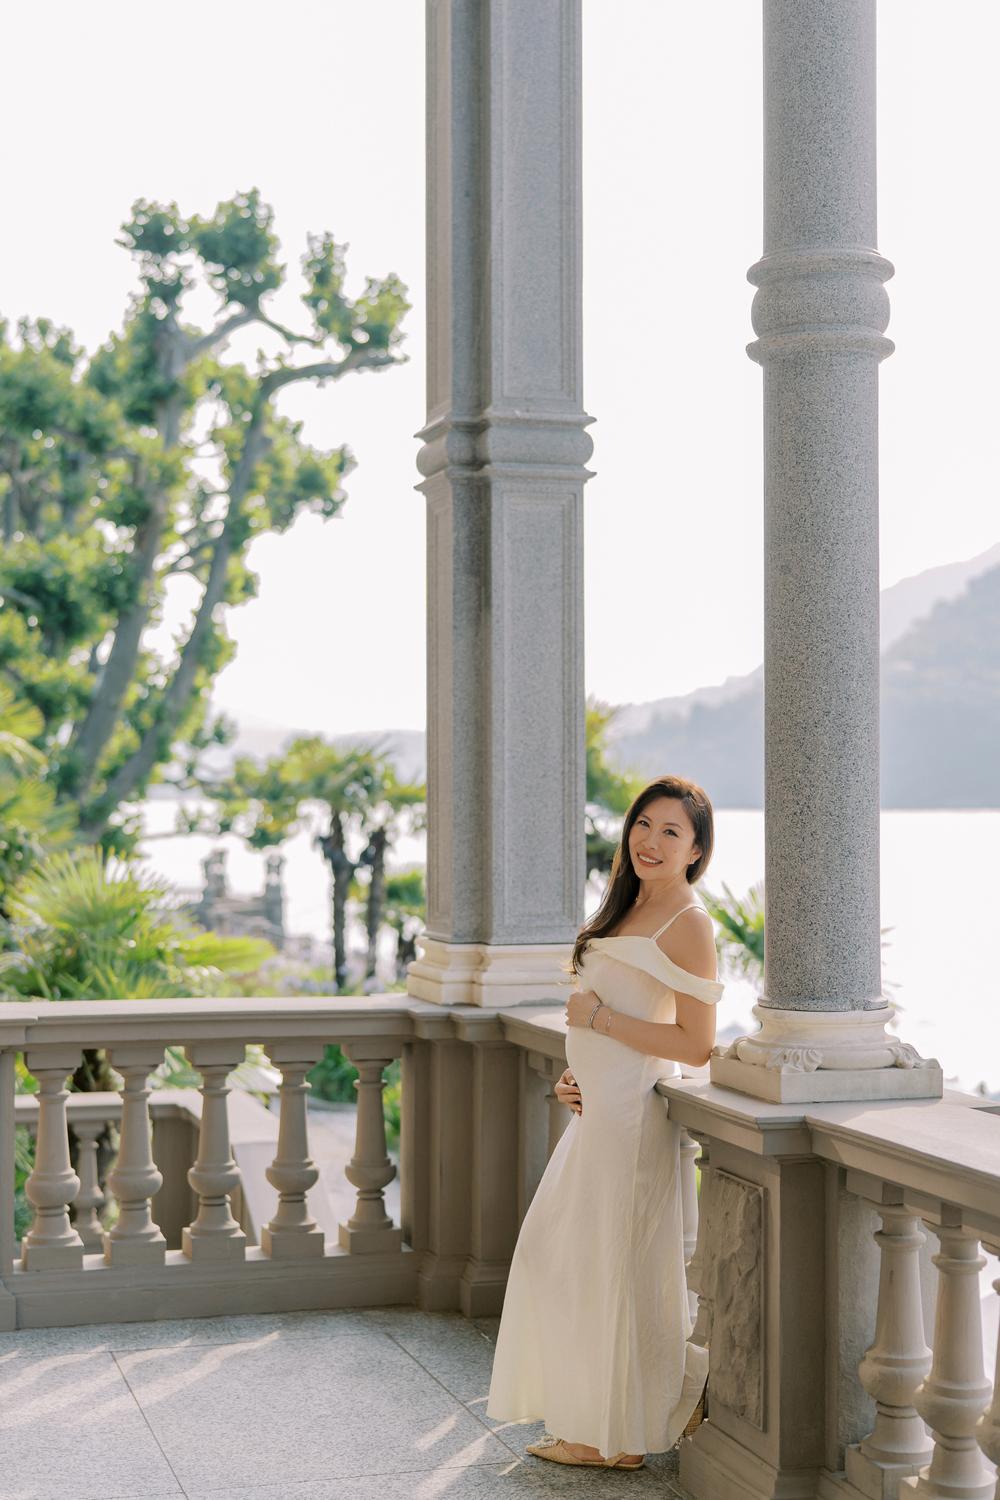 Pregnancy and Family photoshoot on Lake Como